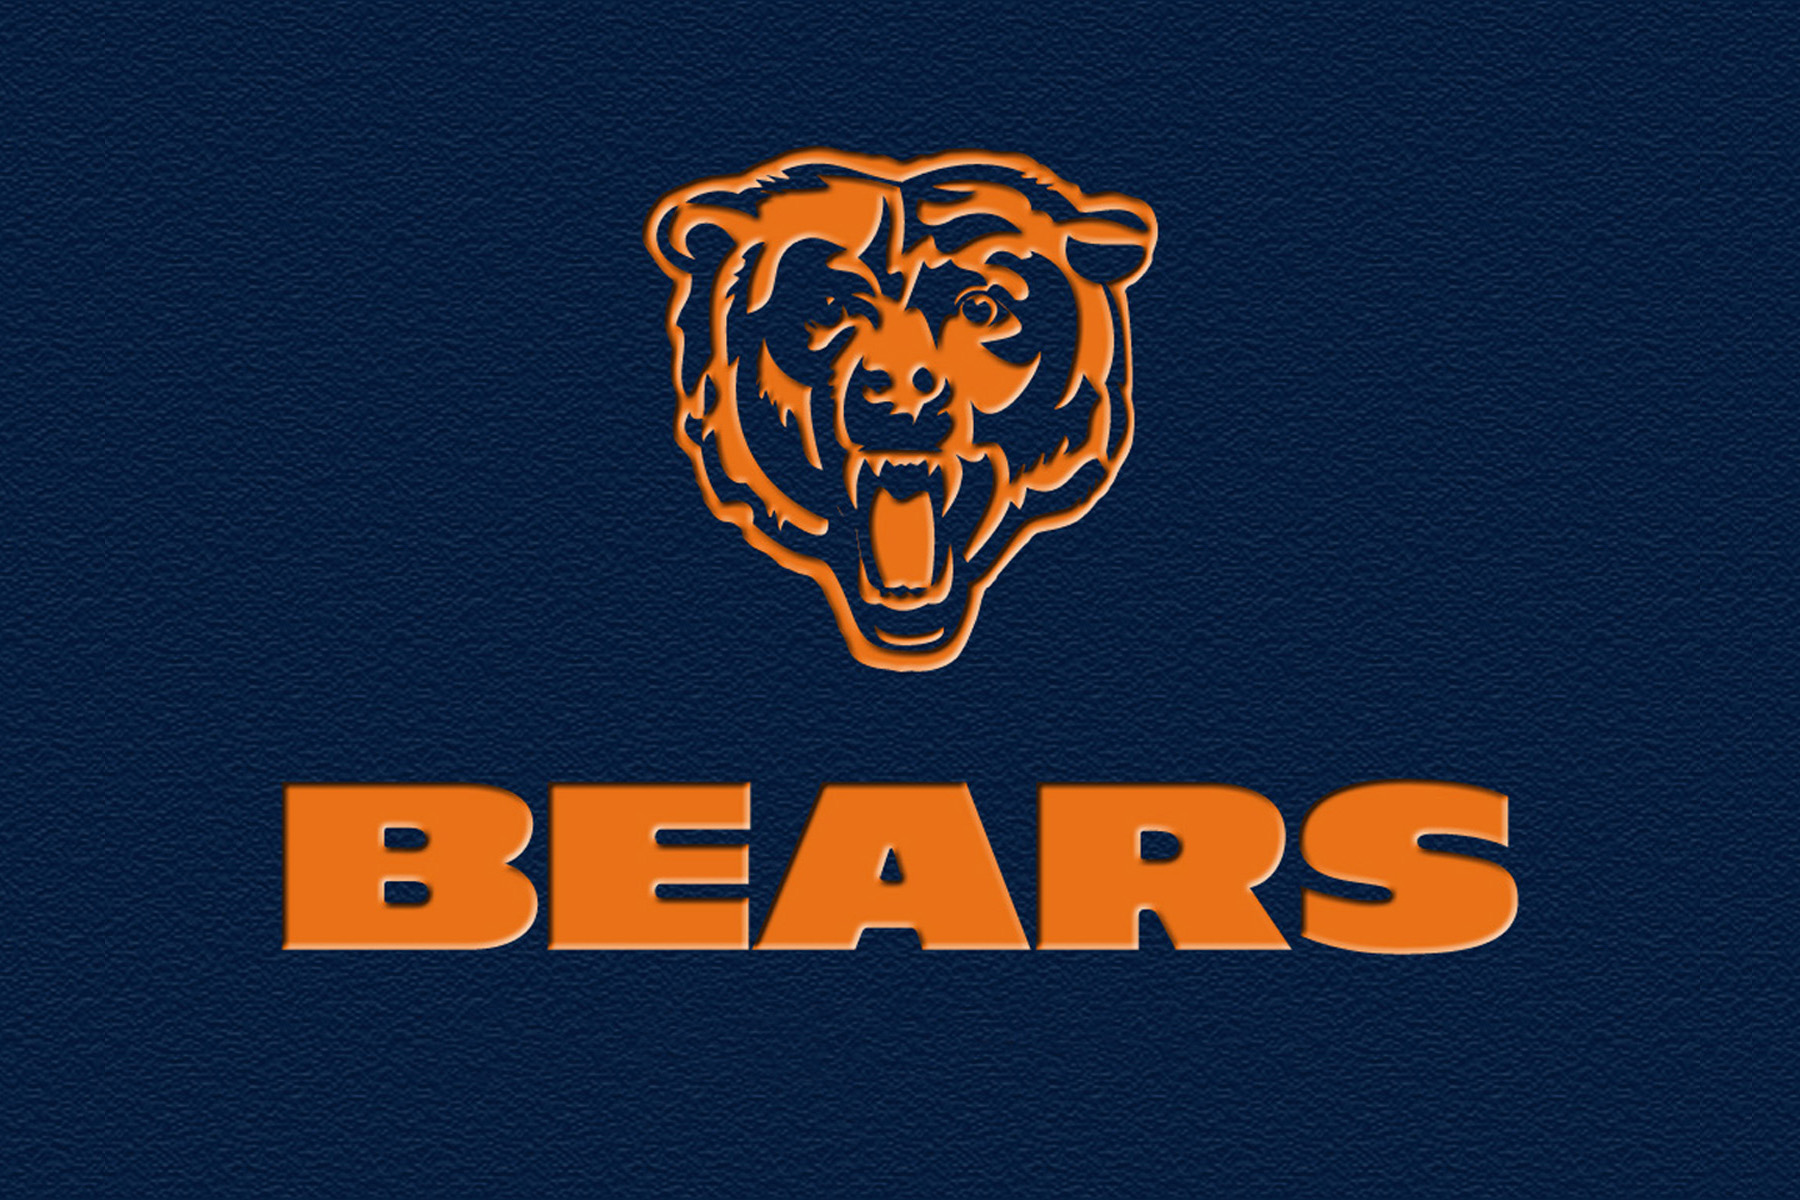 Chicago Bears Logos – NFL | Find Logos At FindThatLogo.com | The ...